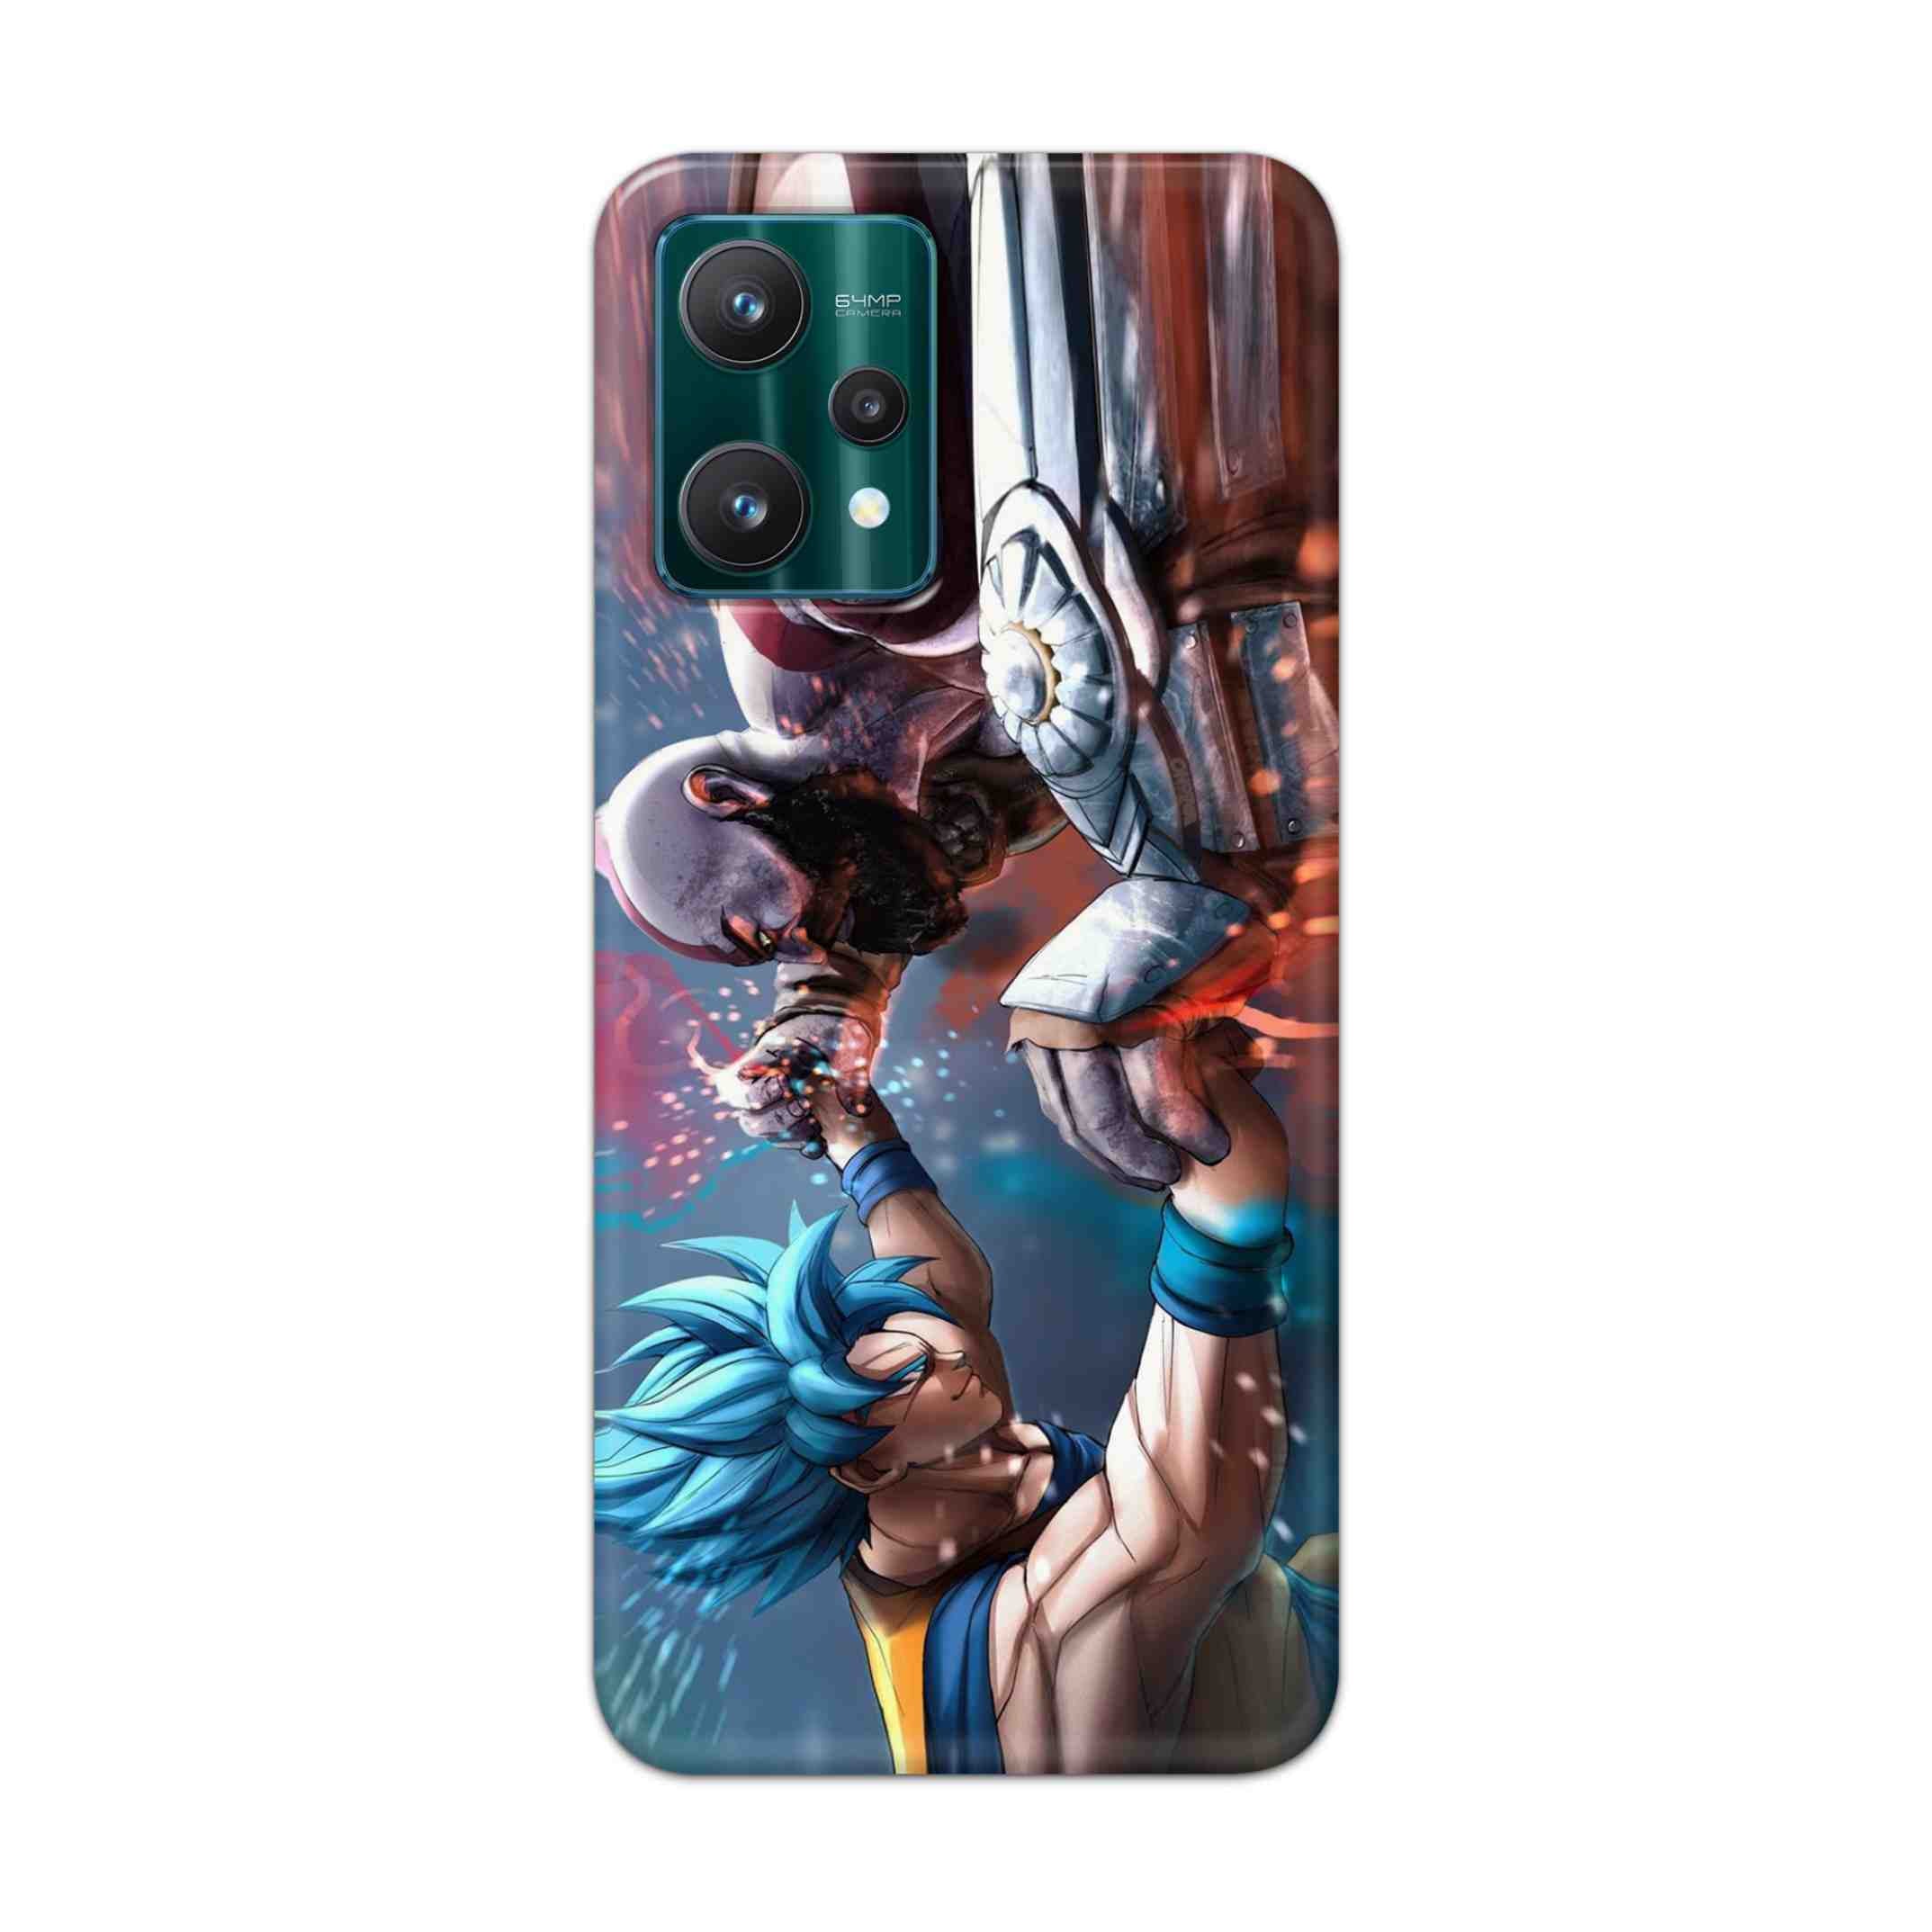 Buy Goku Vs Kratos Hard Back Mobile Phone Case Cover For Realme 9 Pro Online